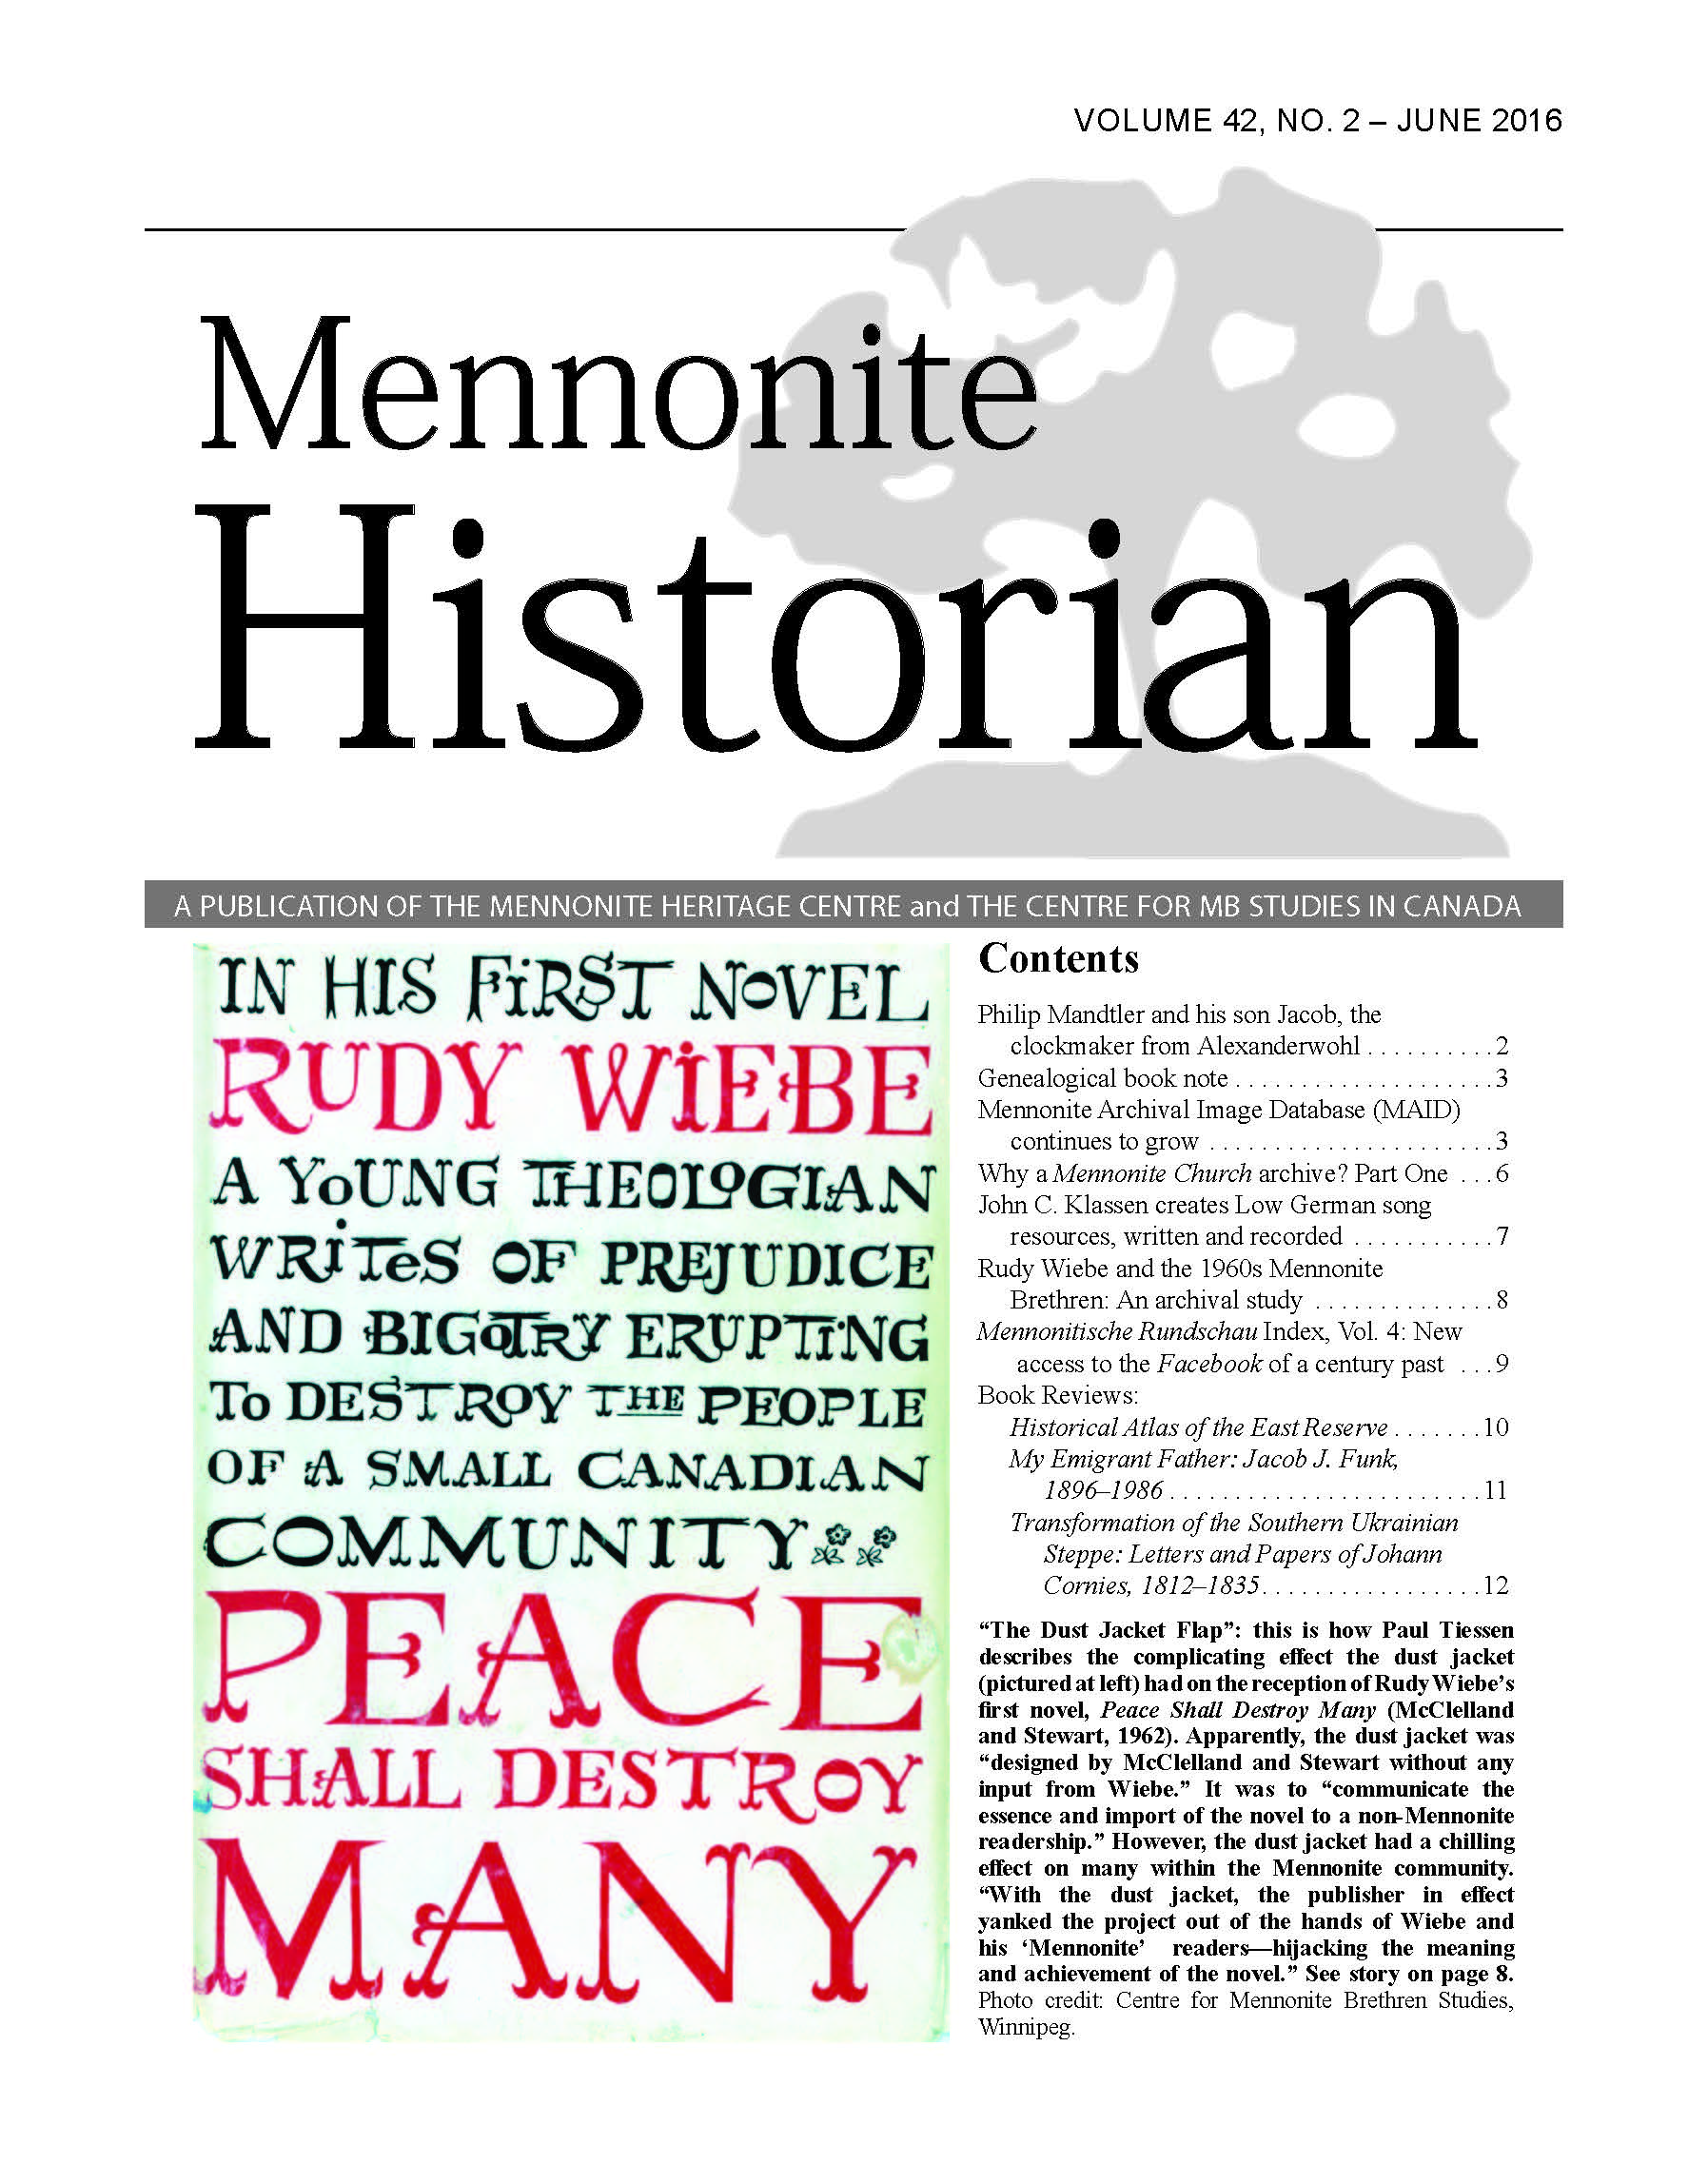 Mennonite Historian (June 2016)